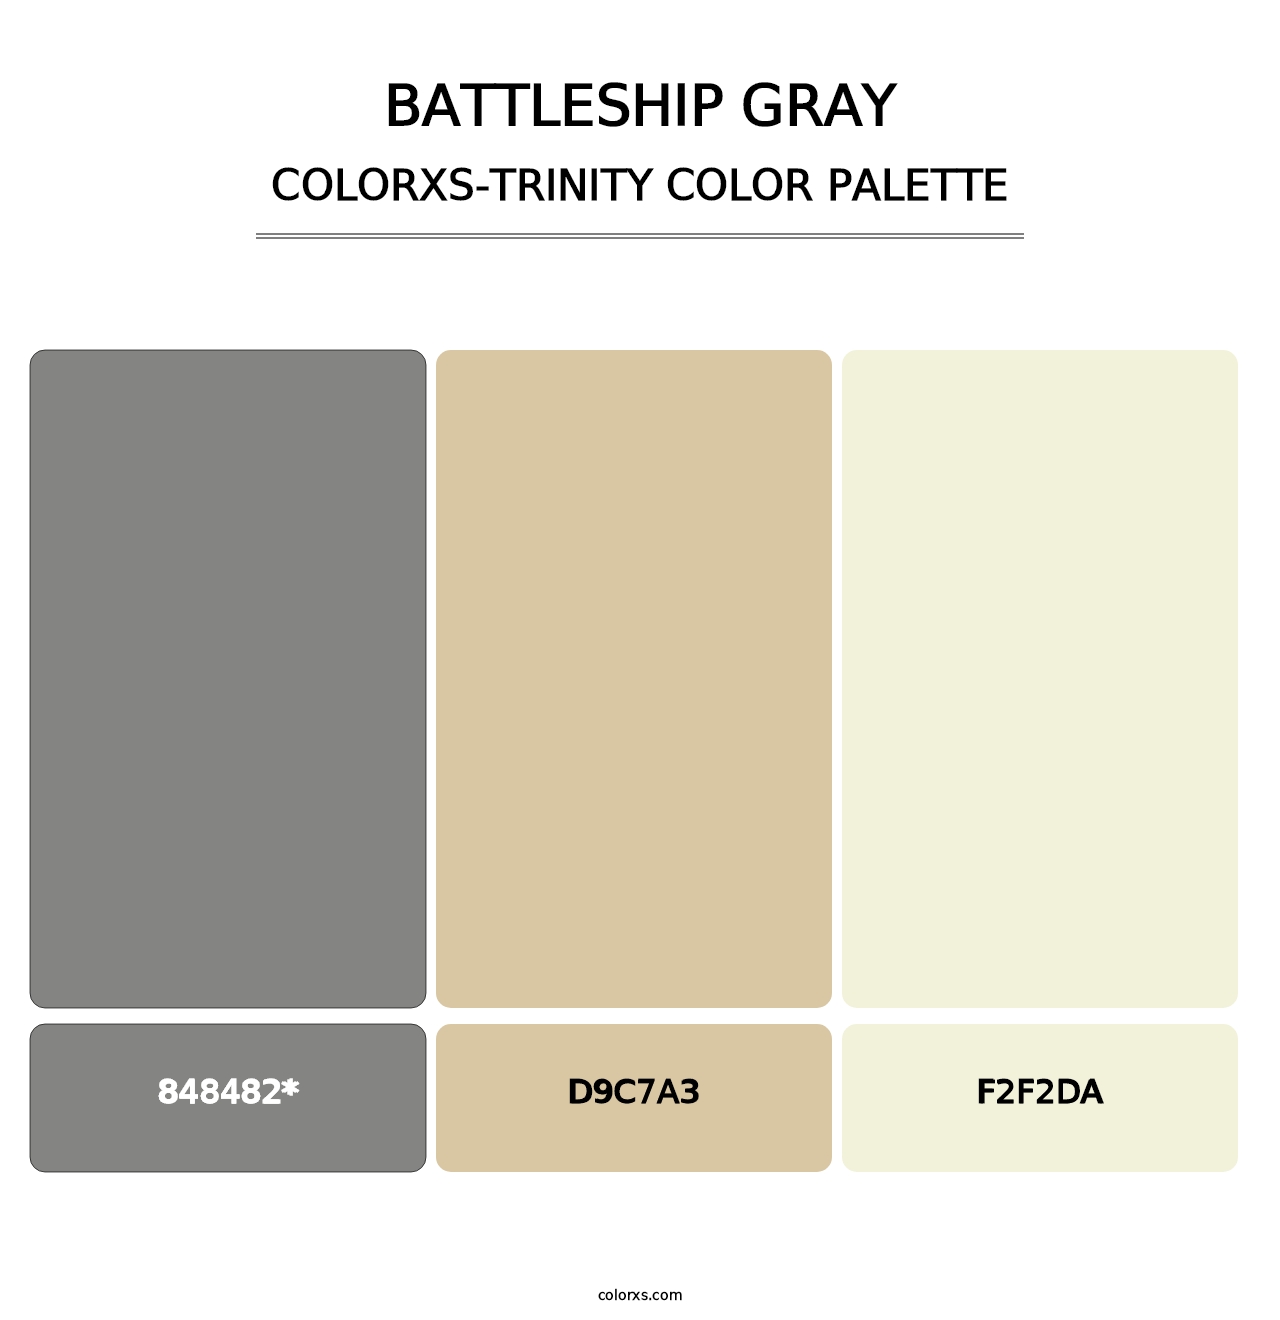 Battleship Gray - Colorxs Trinity Palette